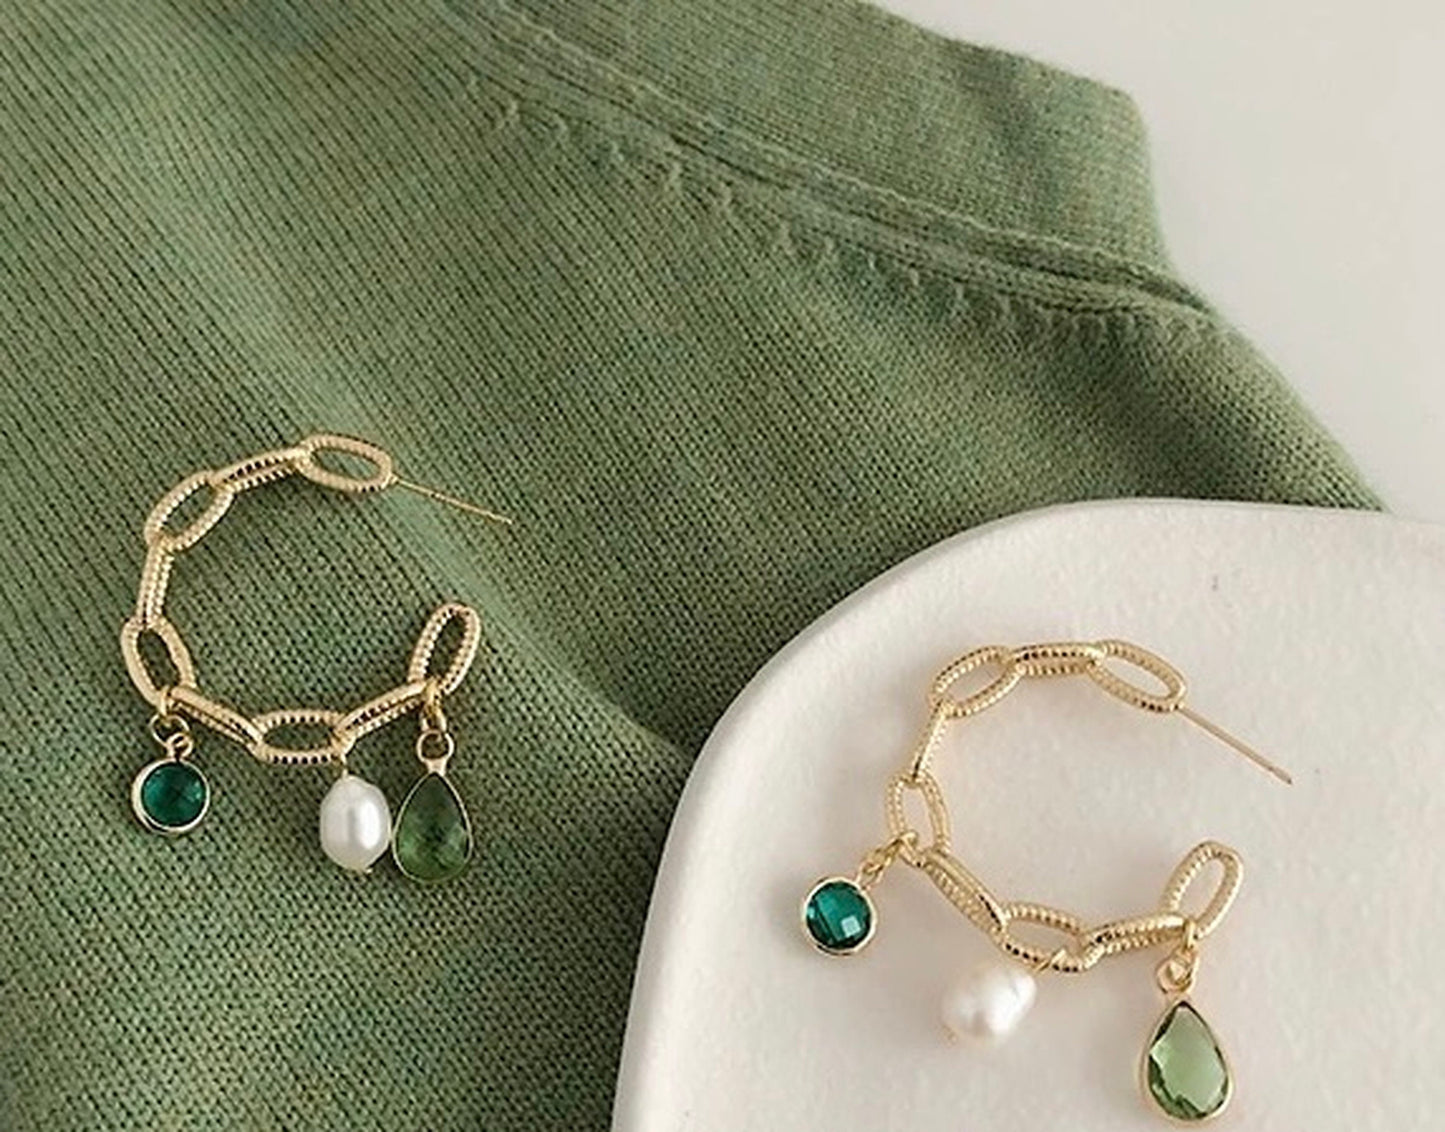 Emerald dangle pearl earrings, Gold link chain hoops, Aqua blue earrings, Natural pearl dangle drop earrings, Vintage style statement huggie